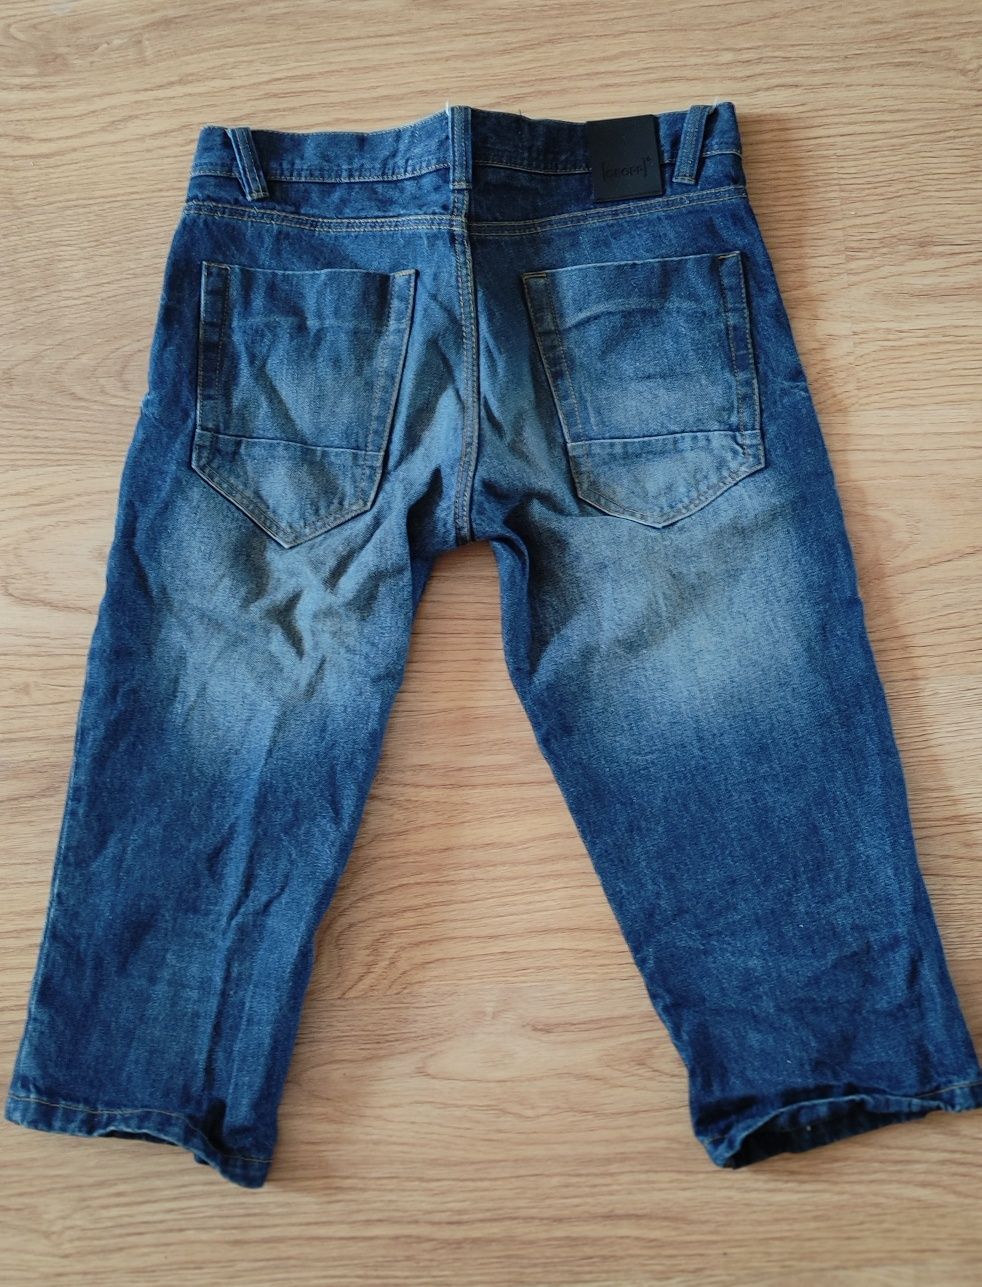 Męskie spodnie krótkie spodenki r. 30 Cropp